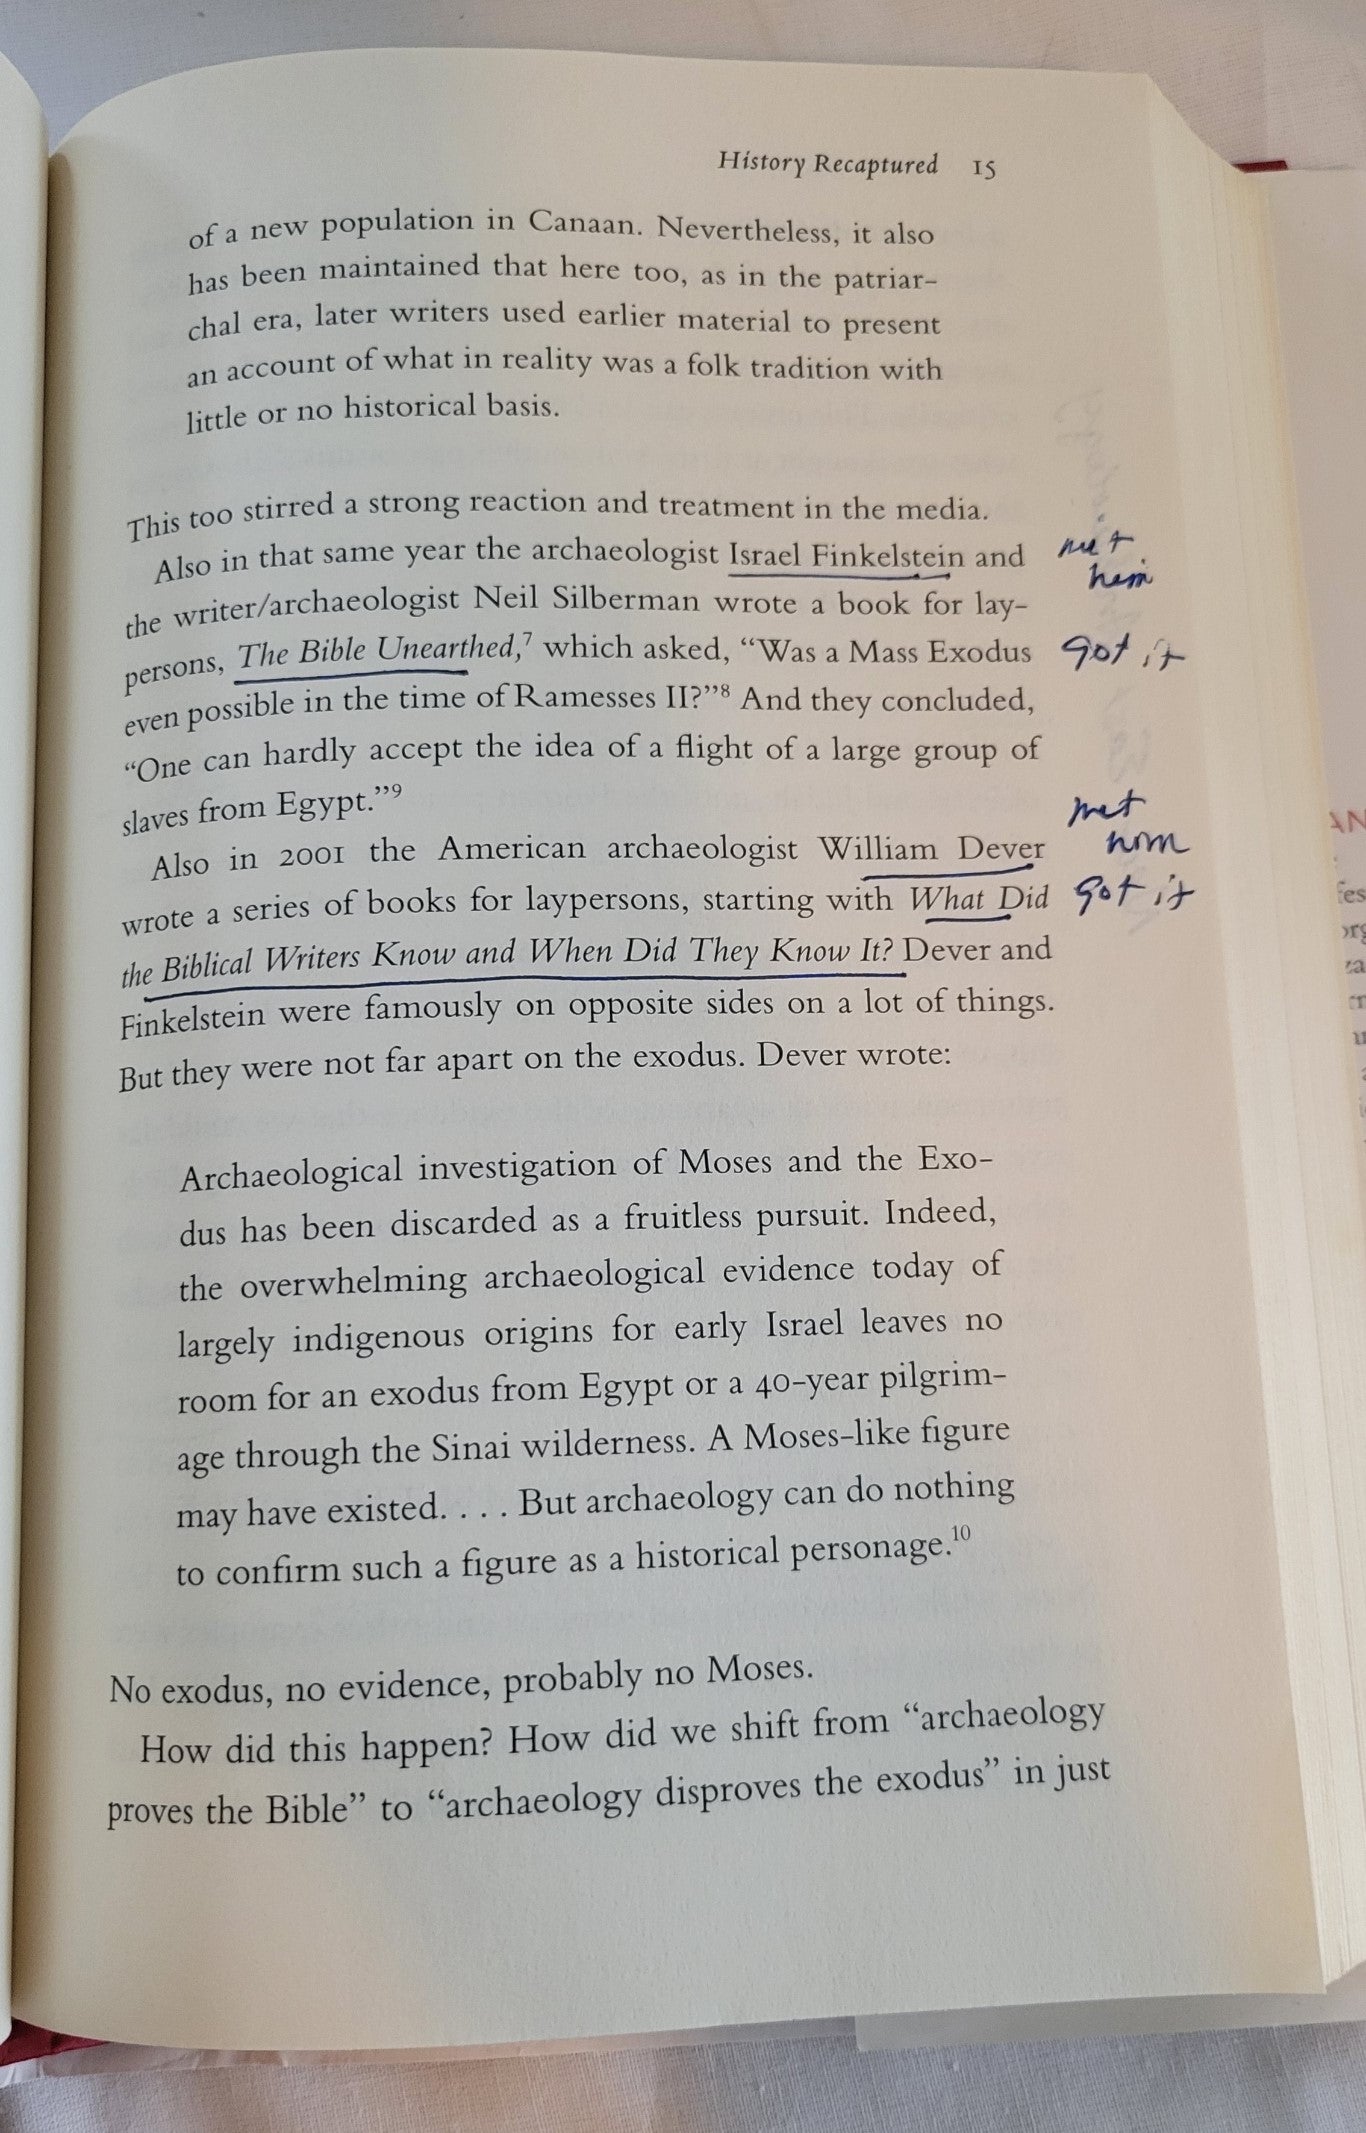 Used book for sale “The Exodus” written by Richard Elliott Friedman. Page 15